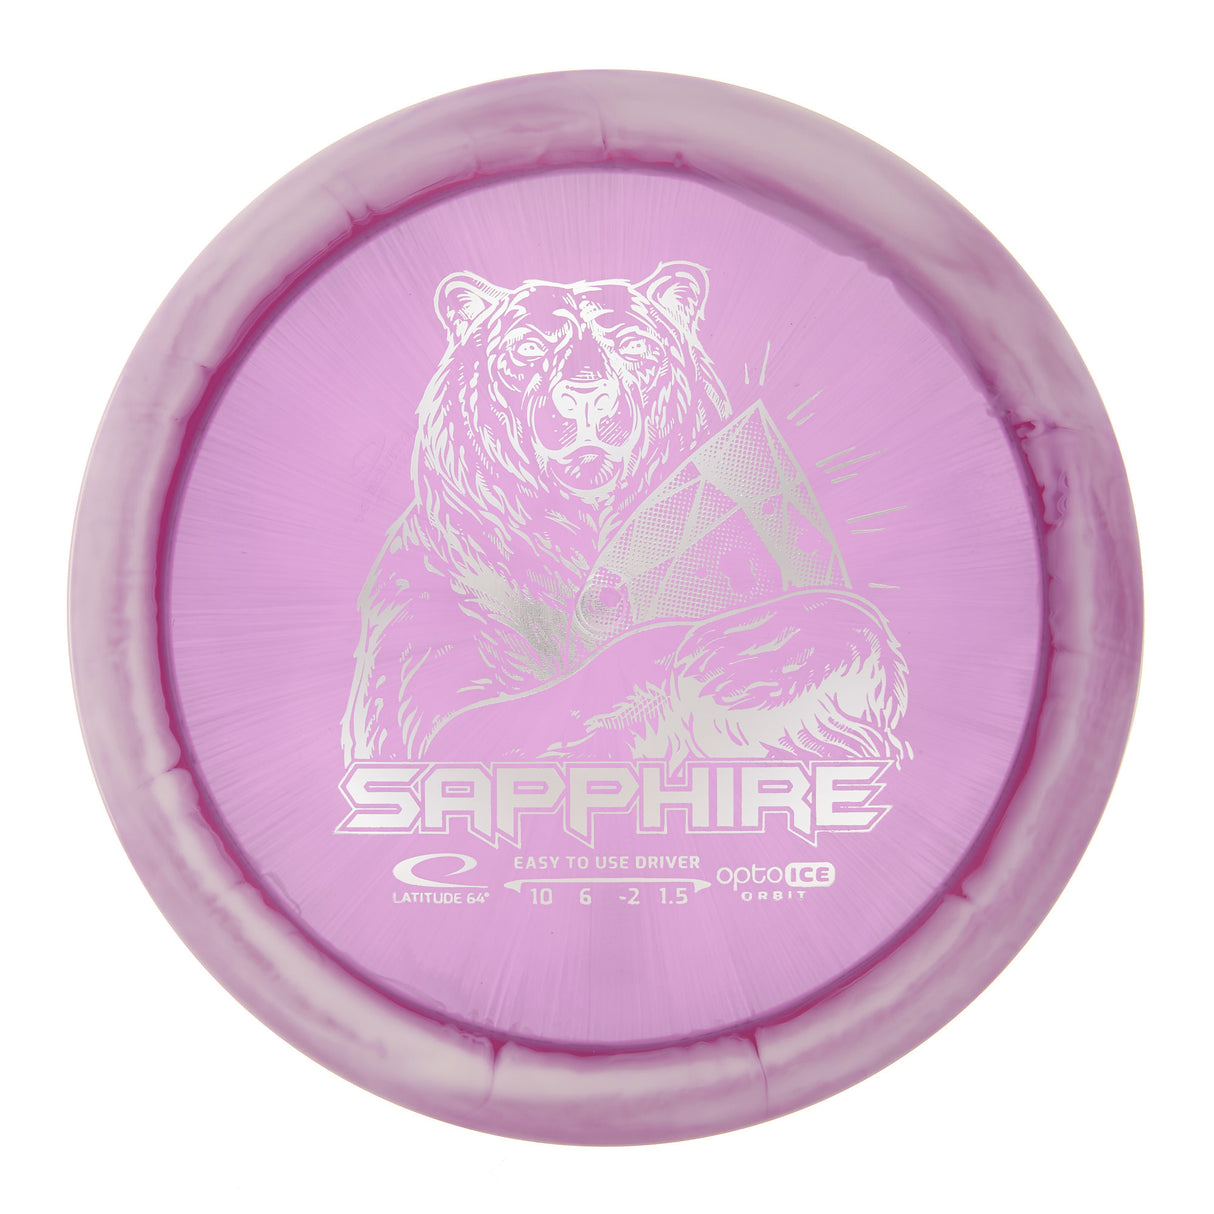 Latitude 64 Sapphire - Opto Ice Orbit 161g | Style 0004